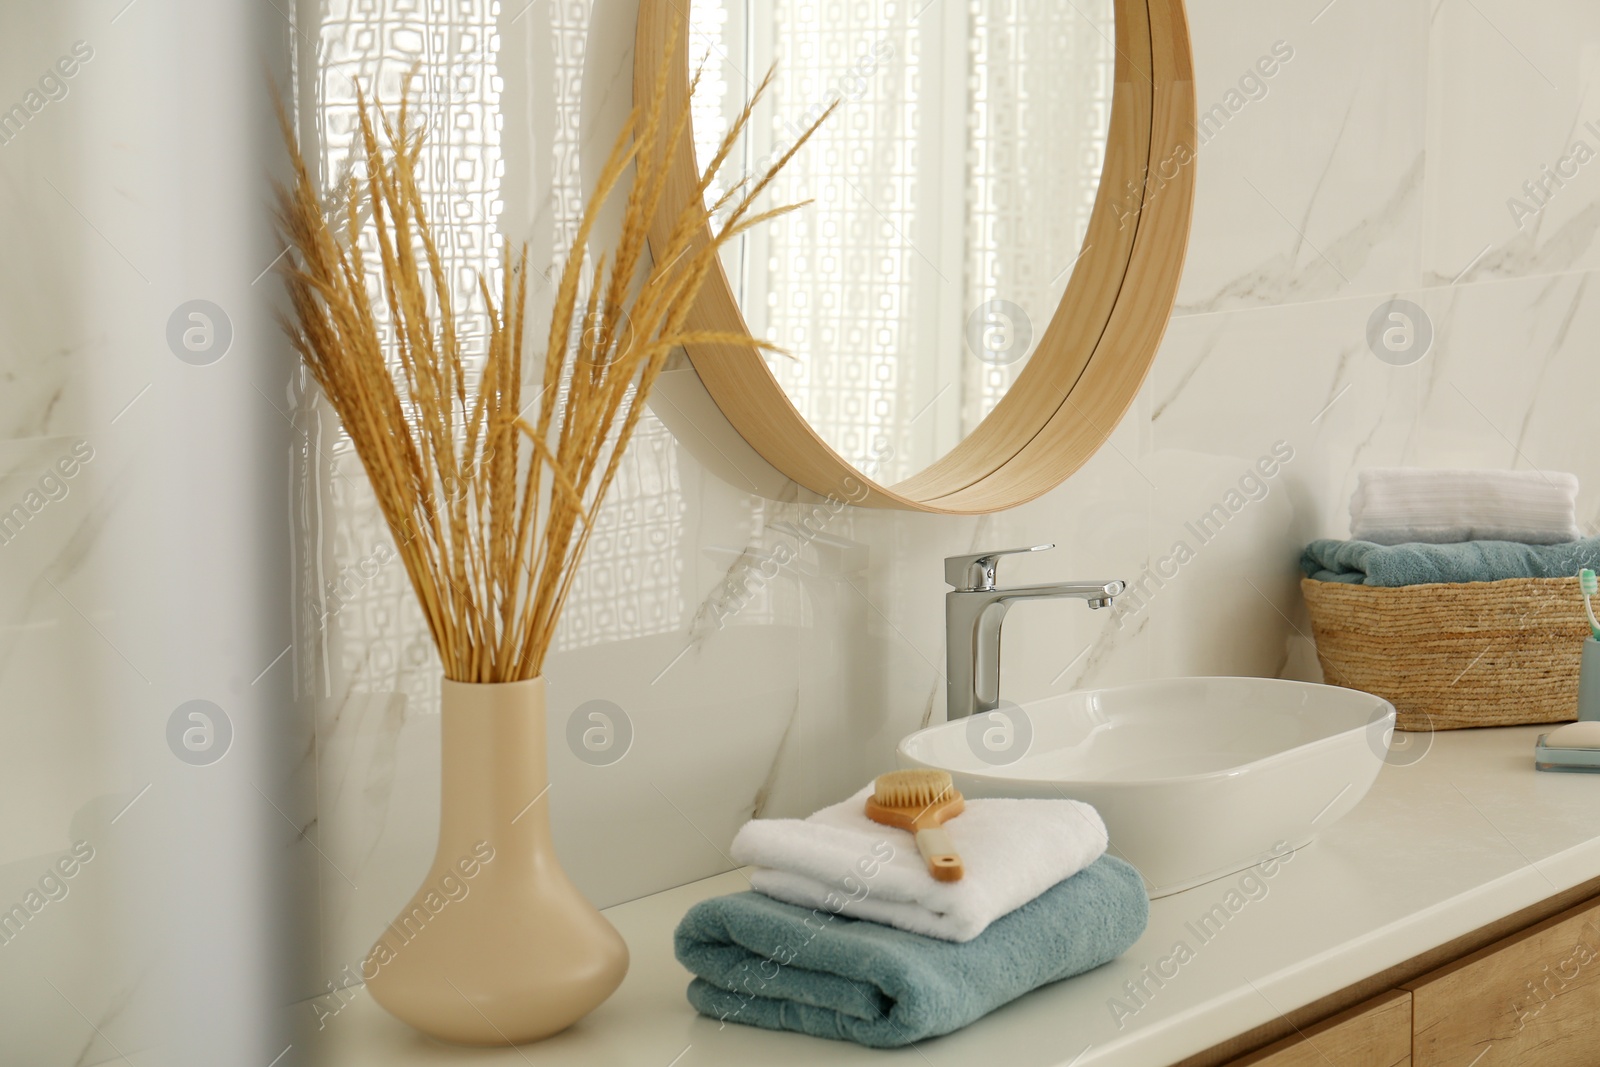 Photo of Round mirror over vessel sink in stylish bathroom